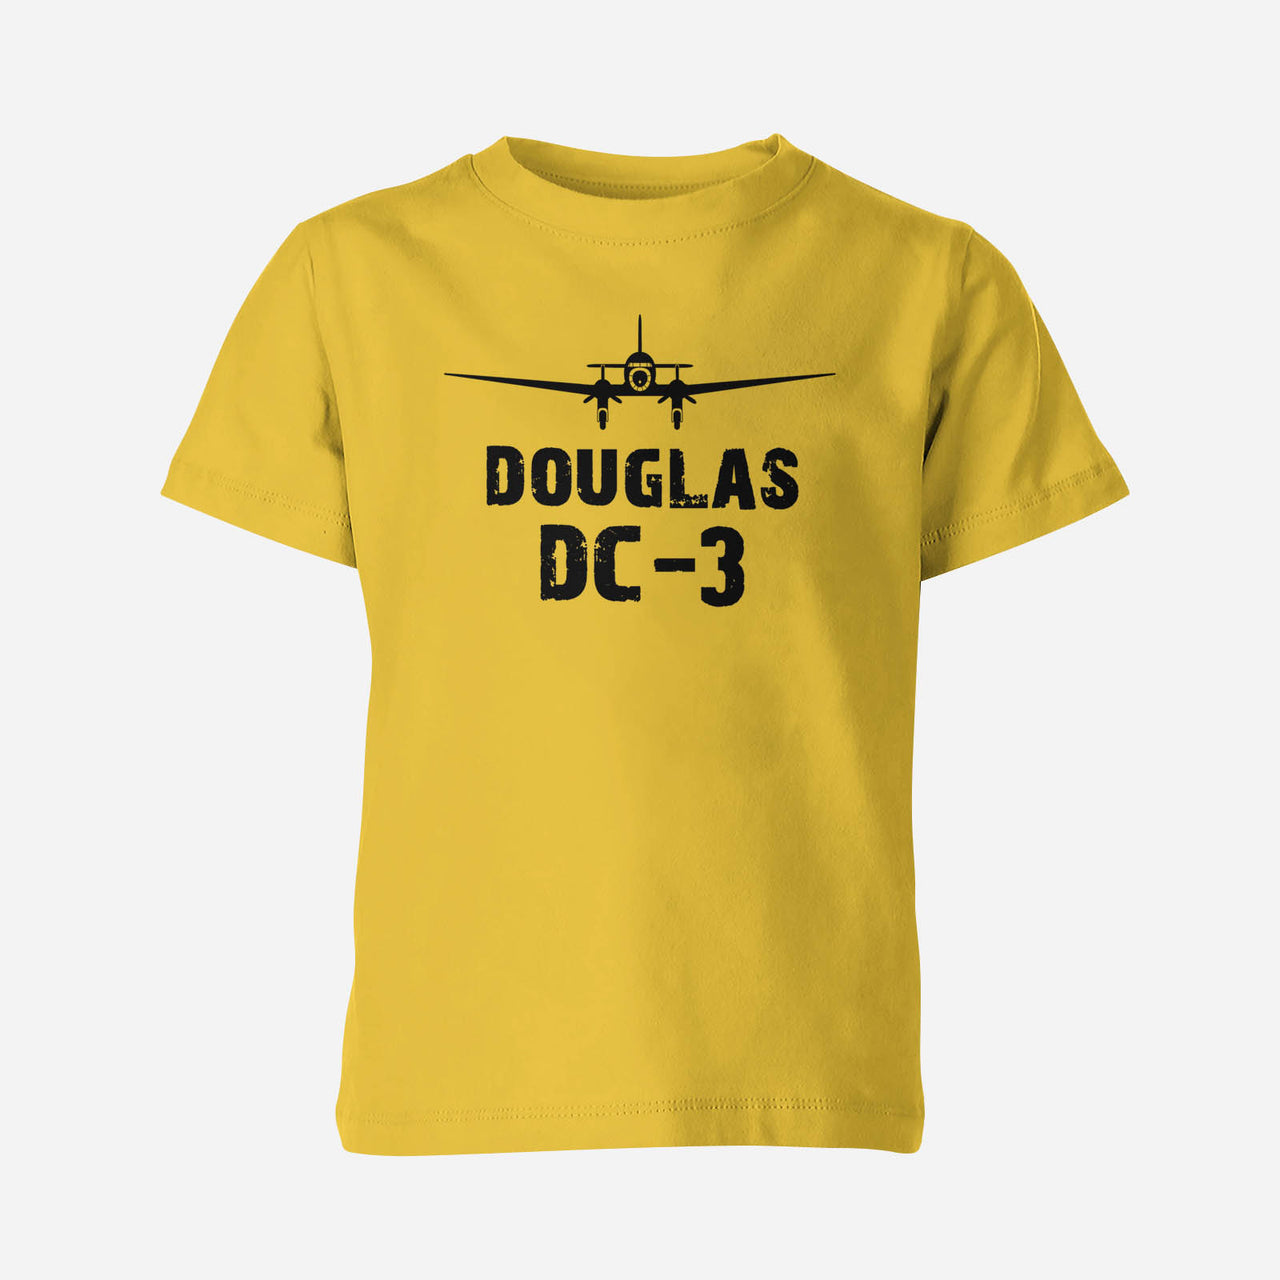 Douglas DC-3 & Plane Designed Children T-Shirts